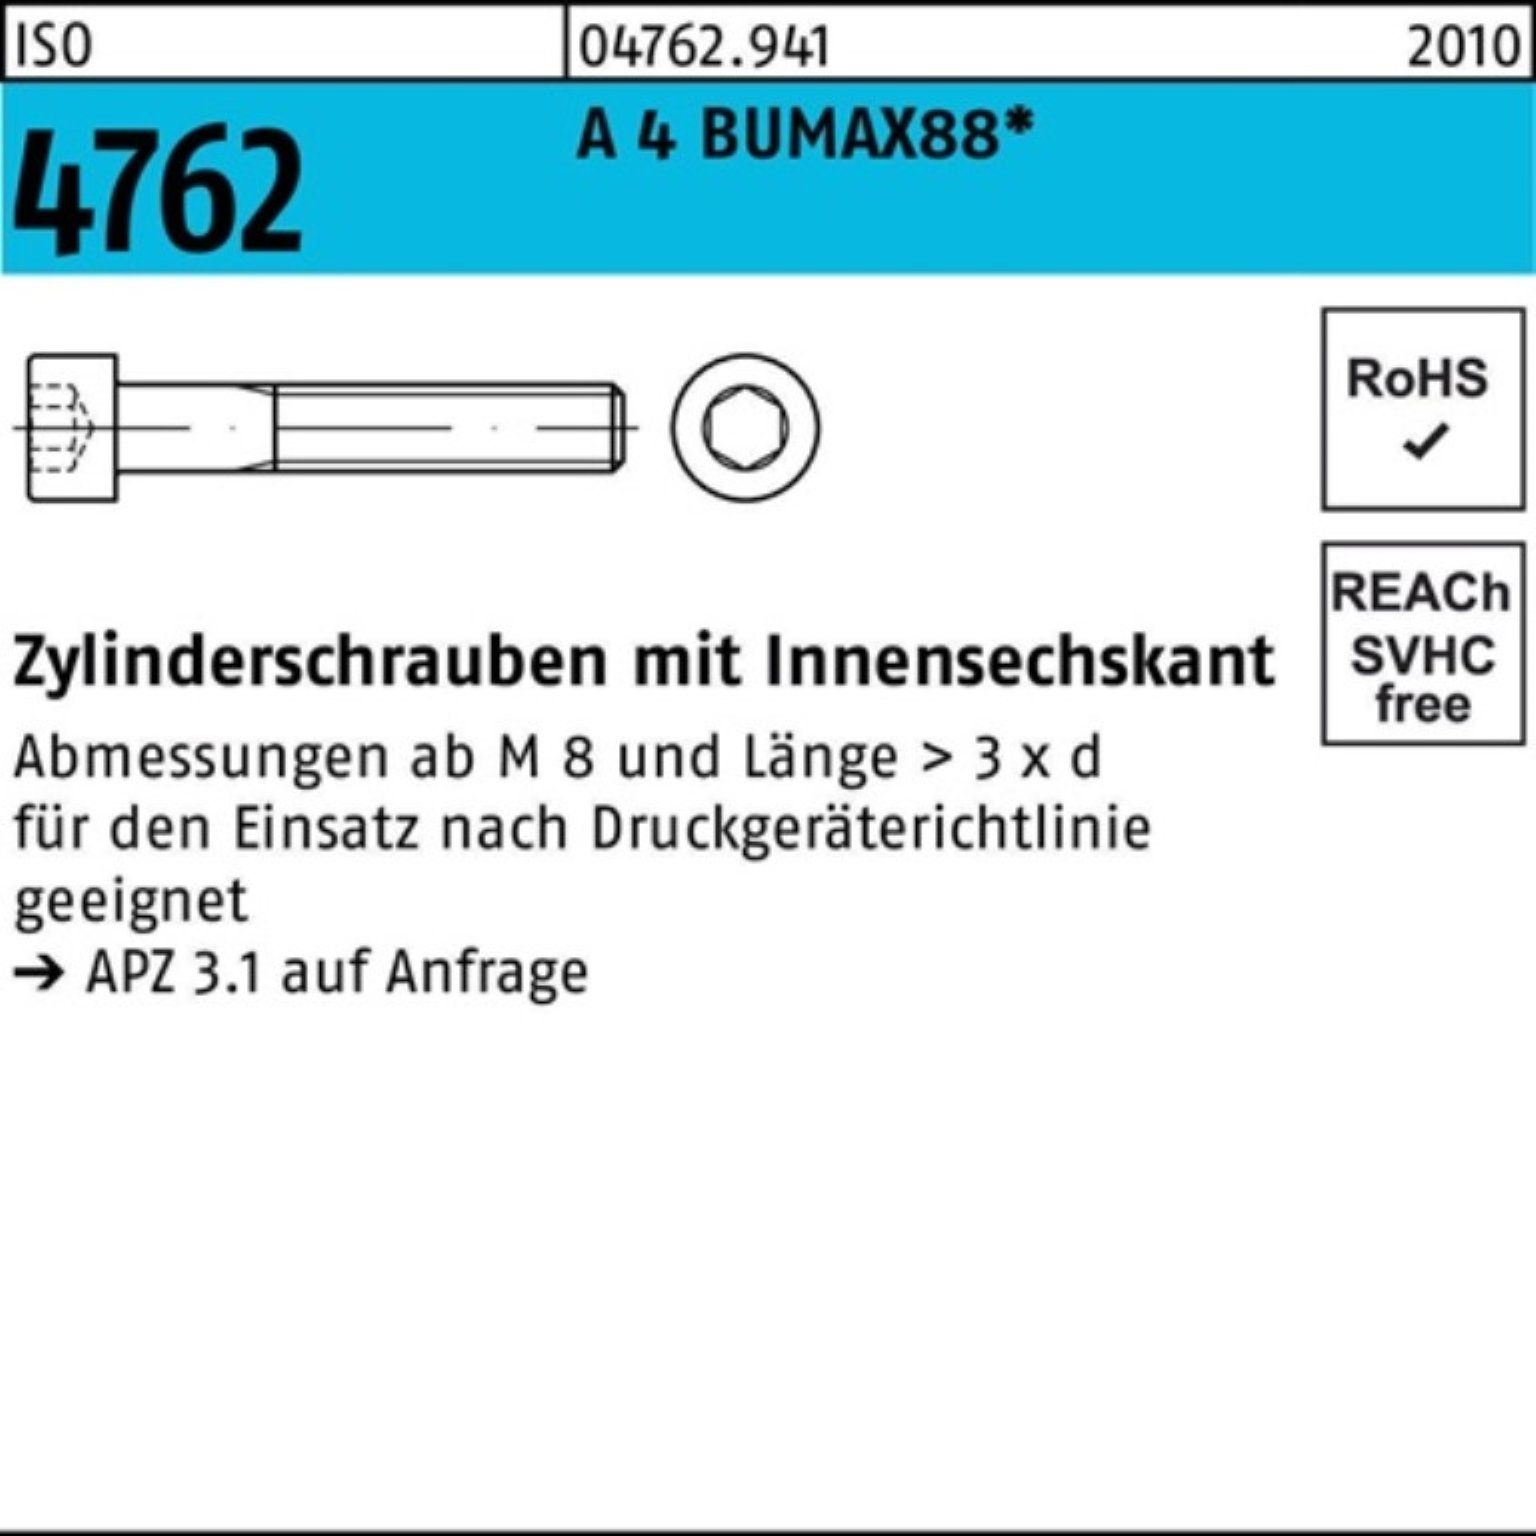 Zylinderschraube M8x S 4762 ISO BUMAX88 40 50 Bufab Zylinderschraube Pack Innen-6kt A 4 100er